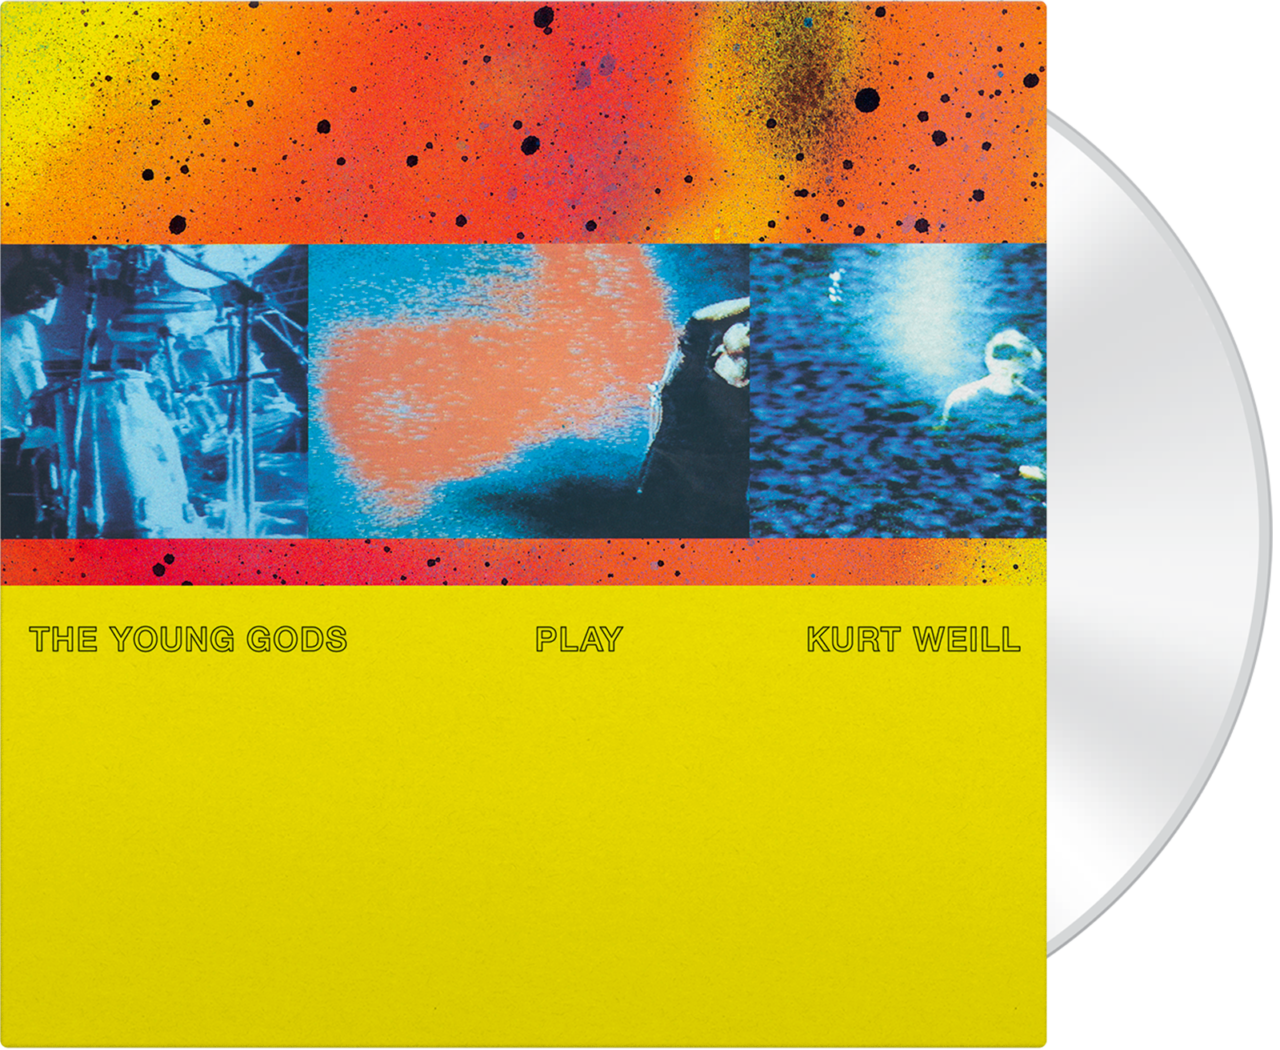 THE YOUNG GODS - Play Kurt Weill (30 Years Anniversary Vinyl Reissue) - CD